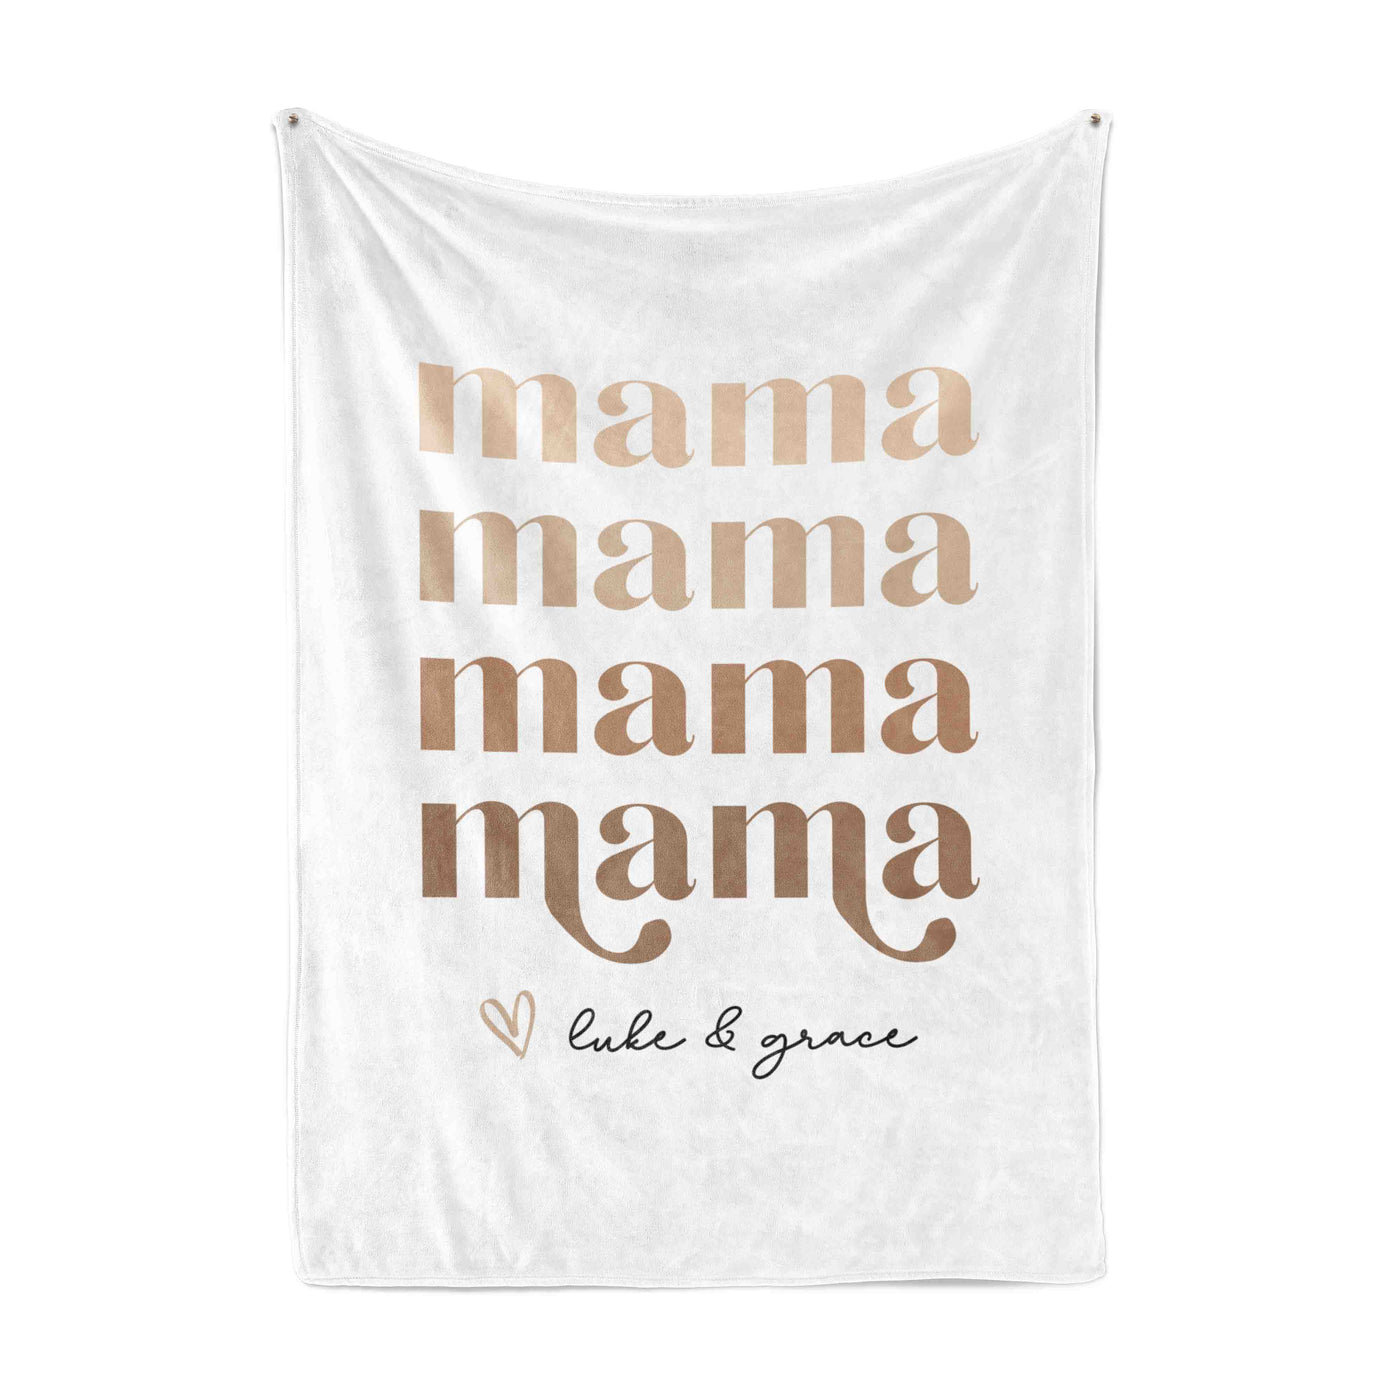 Personalized Blanket | Retro Mama